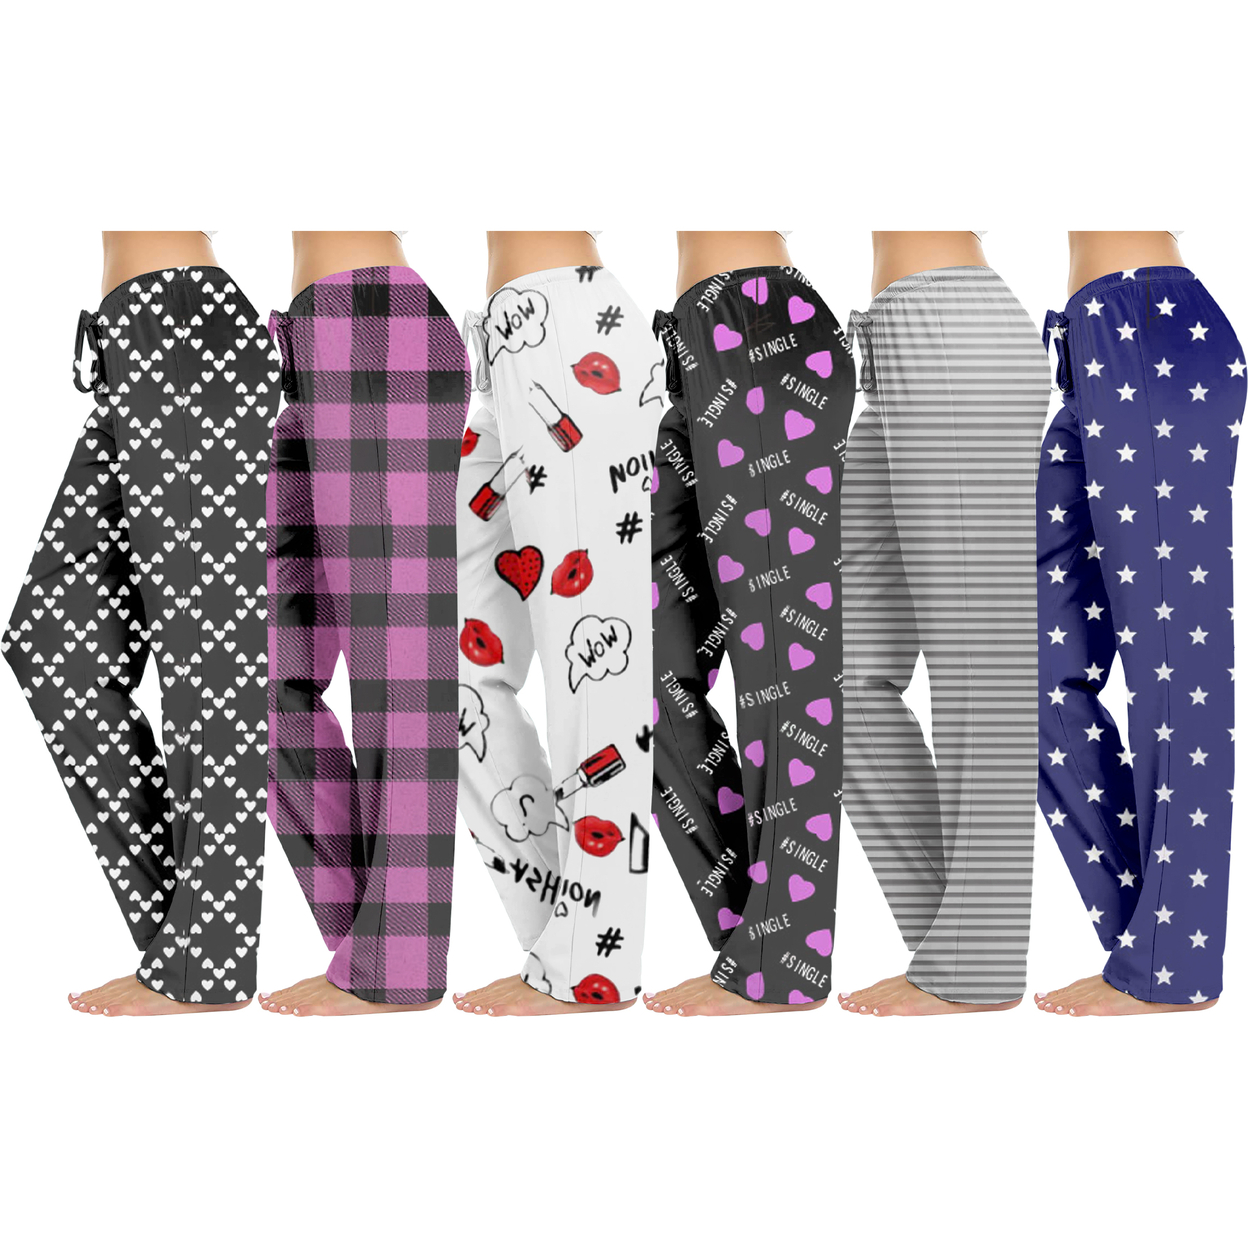 5-Pack: Women's Casual Fun Printed Lightweight Lounge Terry Knit Pajama Bottom Pants - Large, Animal